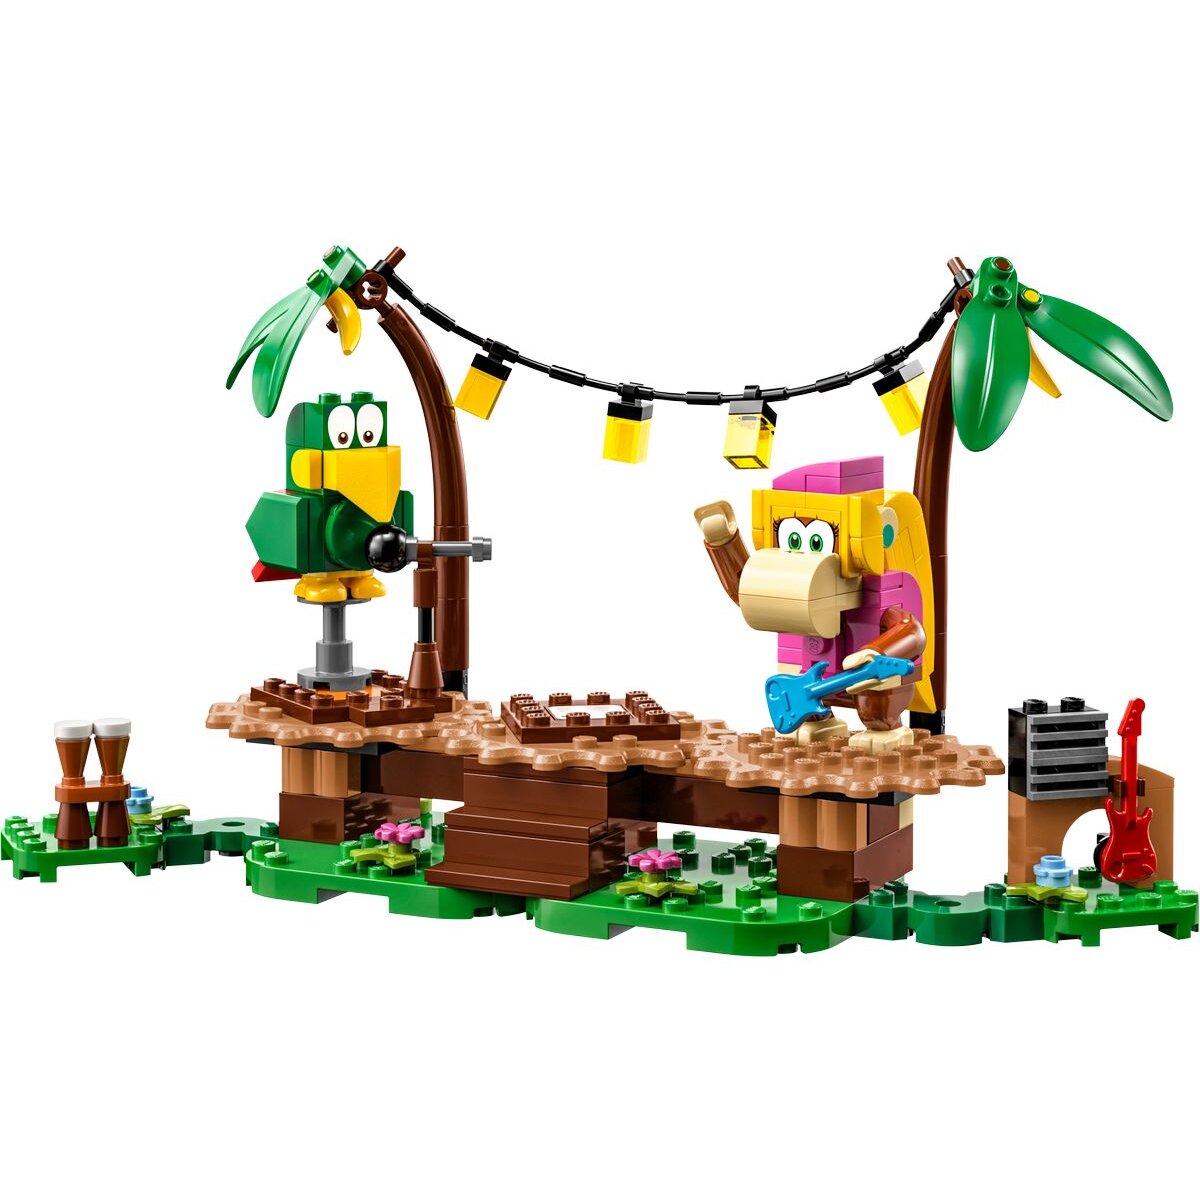 LEGO® Super Mario 71421 Dixie Kong's Jungle Jam Expansion Set